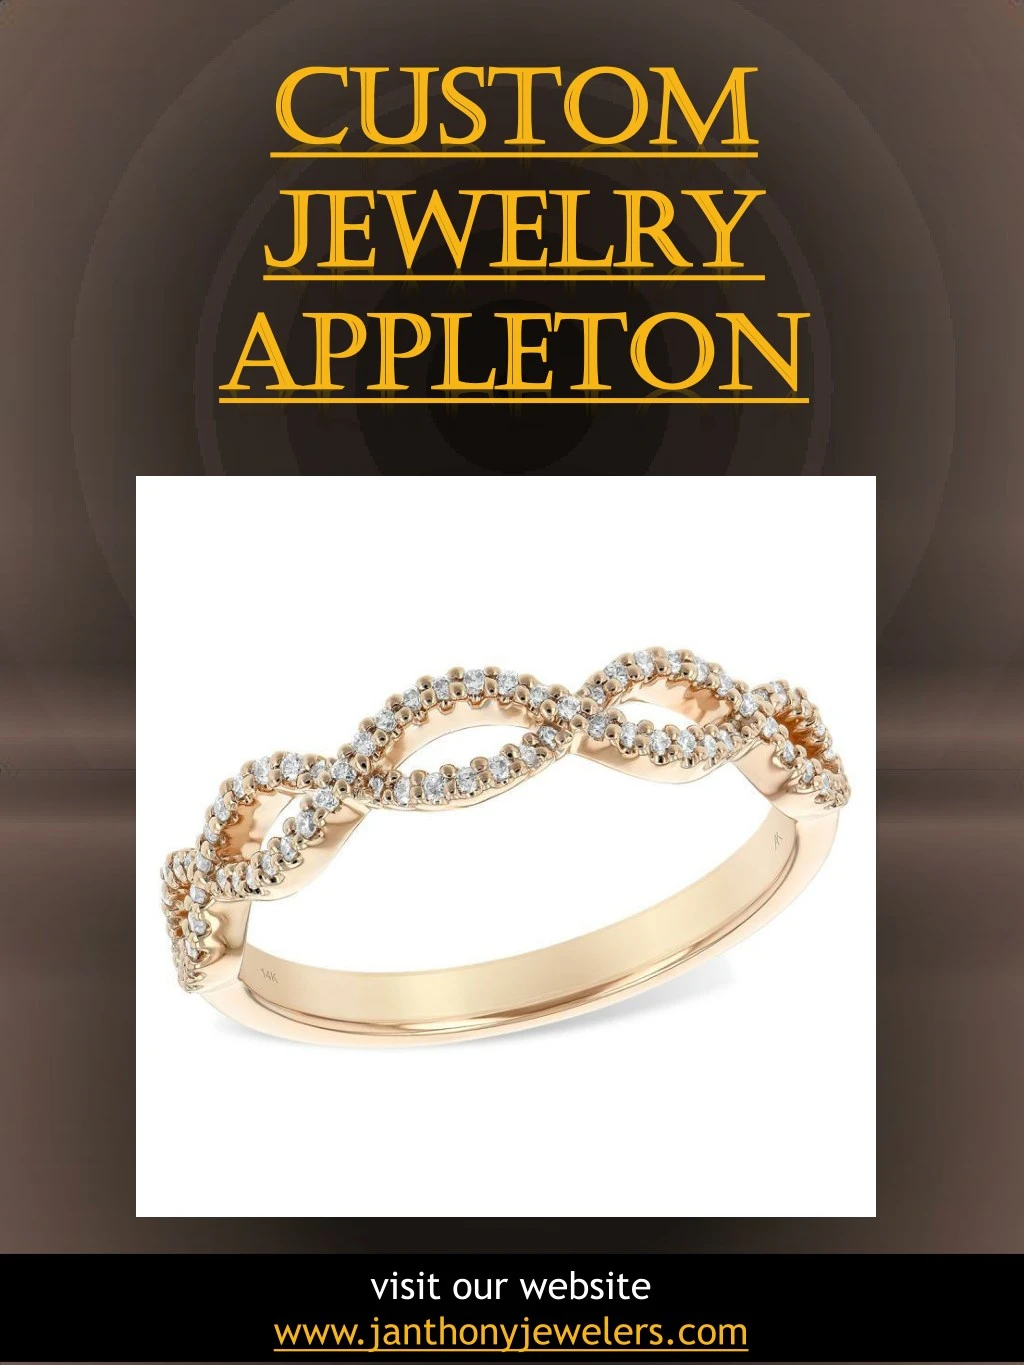 custom custom jewelry jewelry appleton appleton